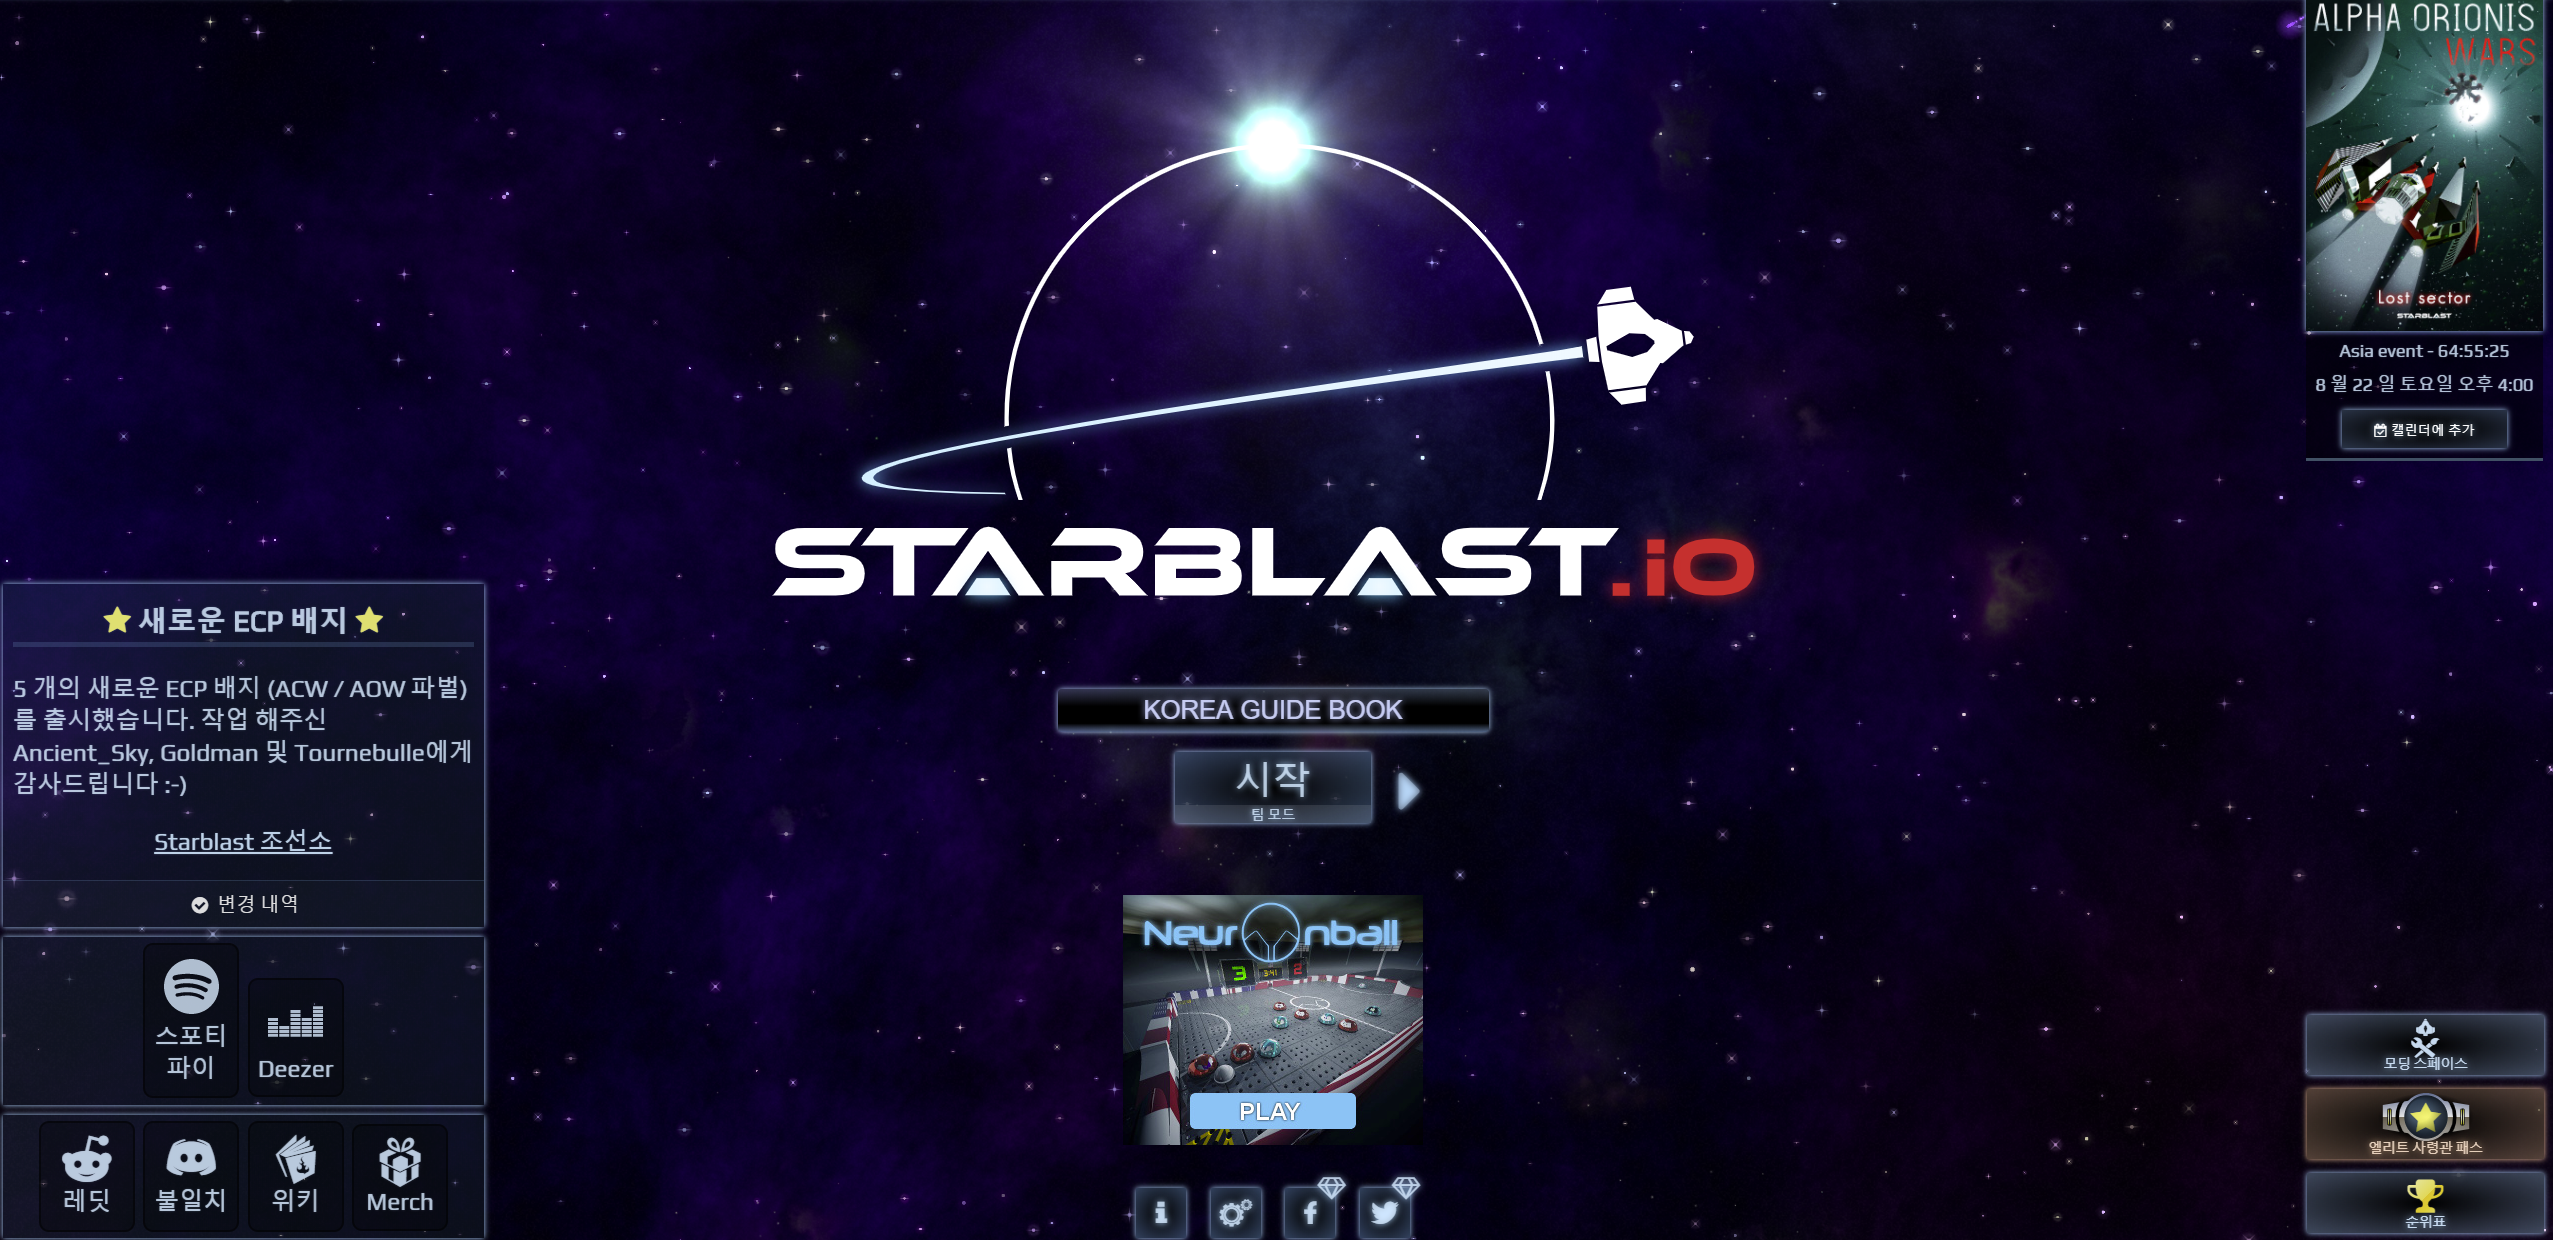 Starblast.io - 나무위키